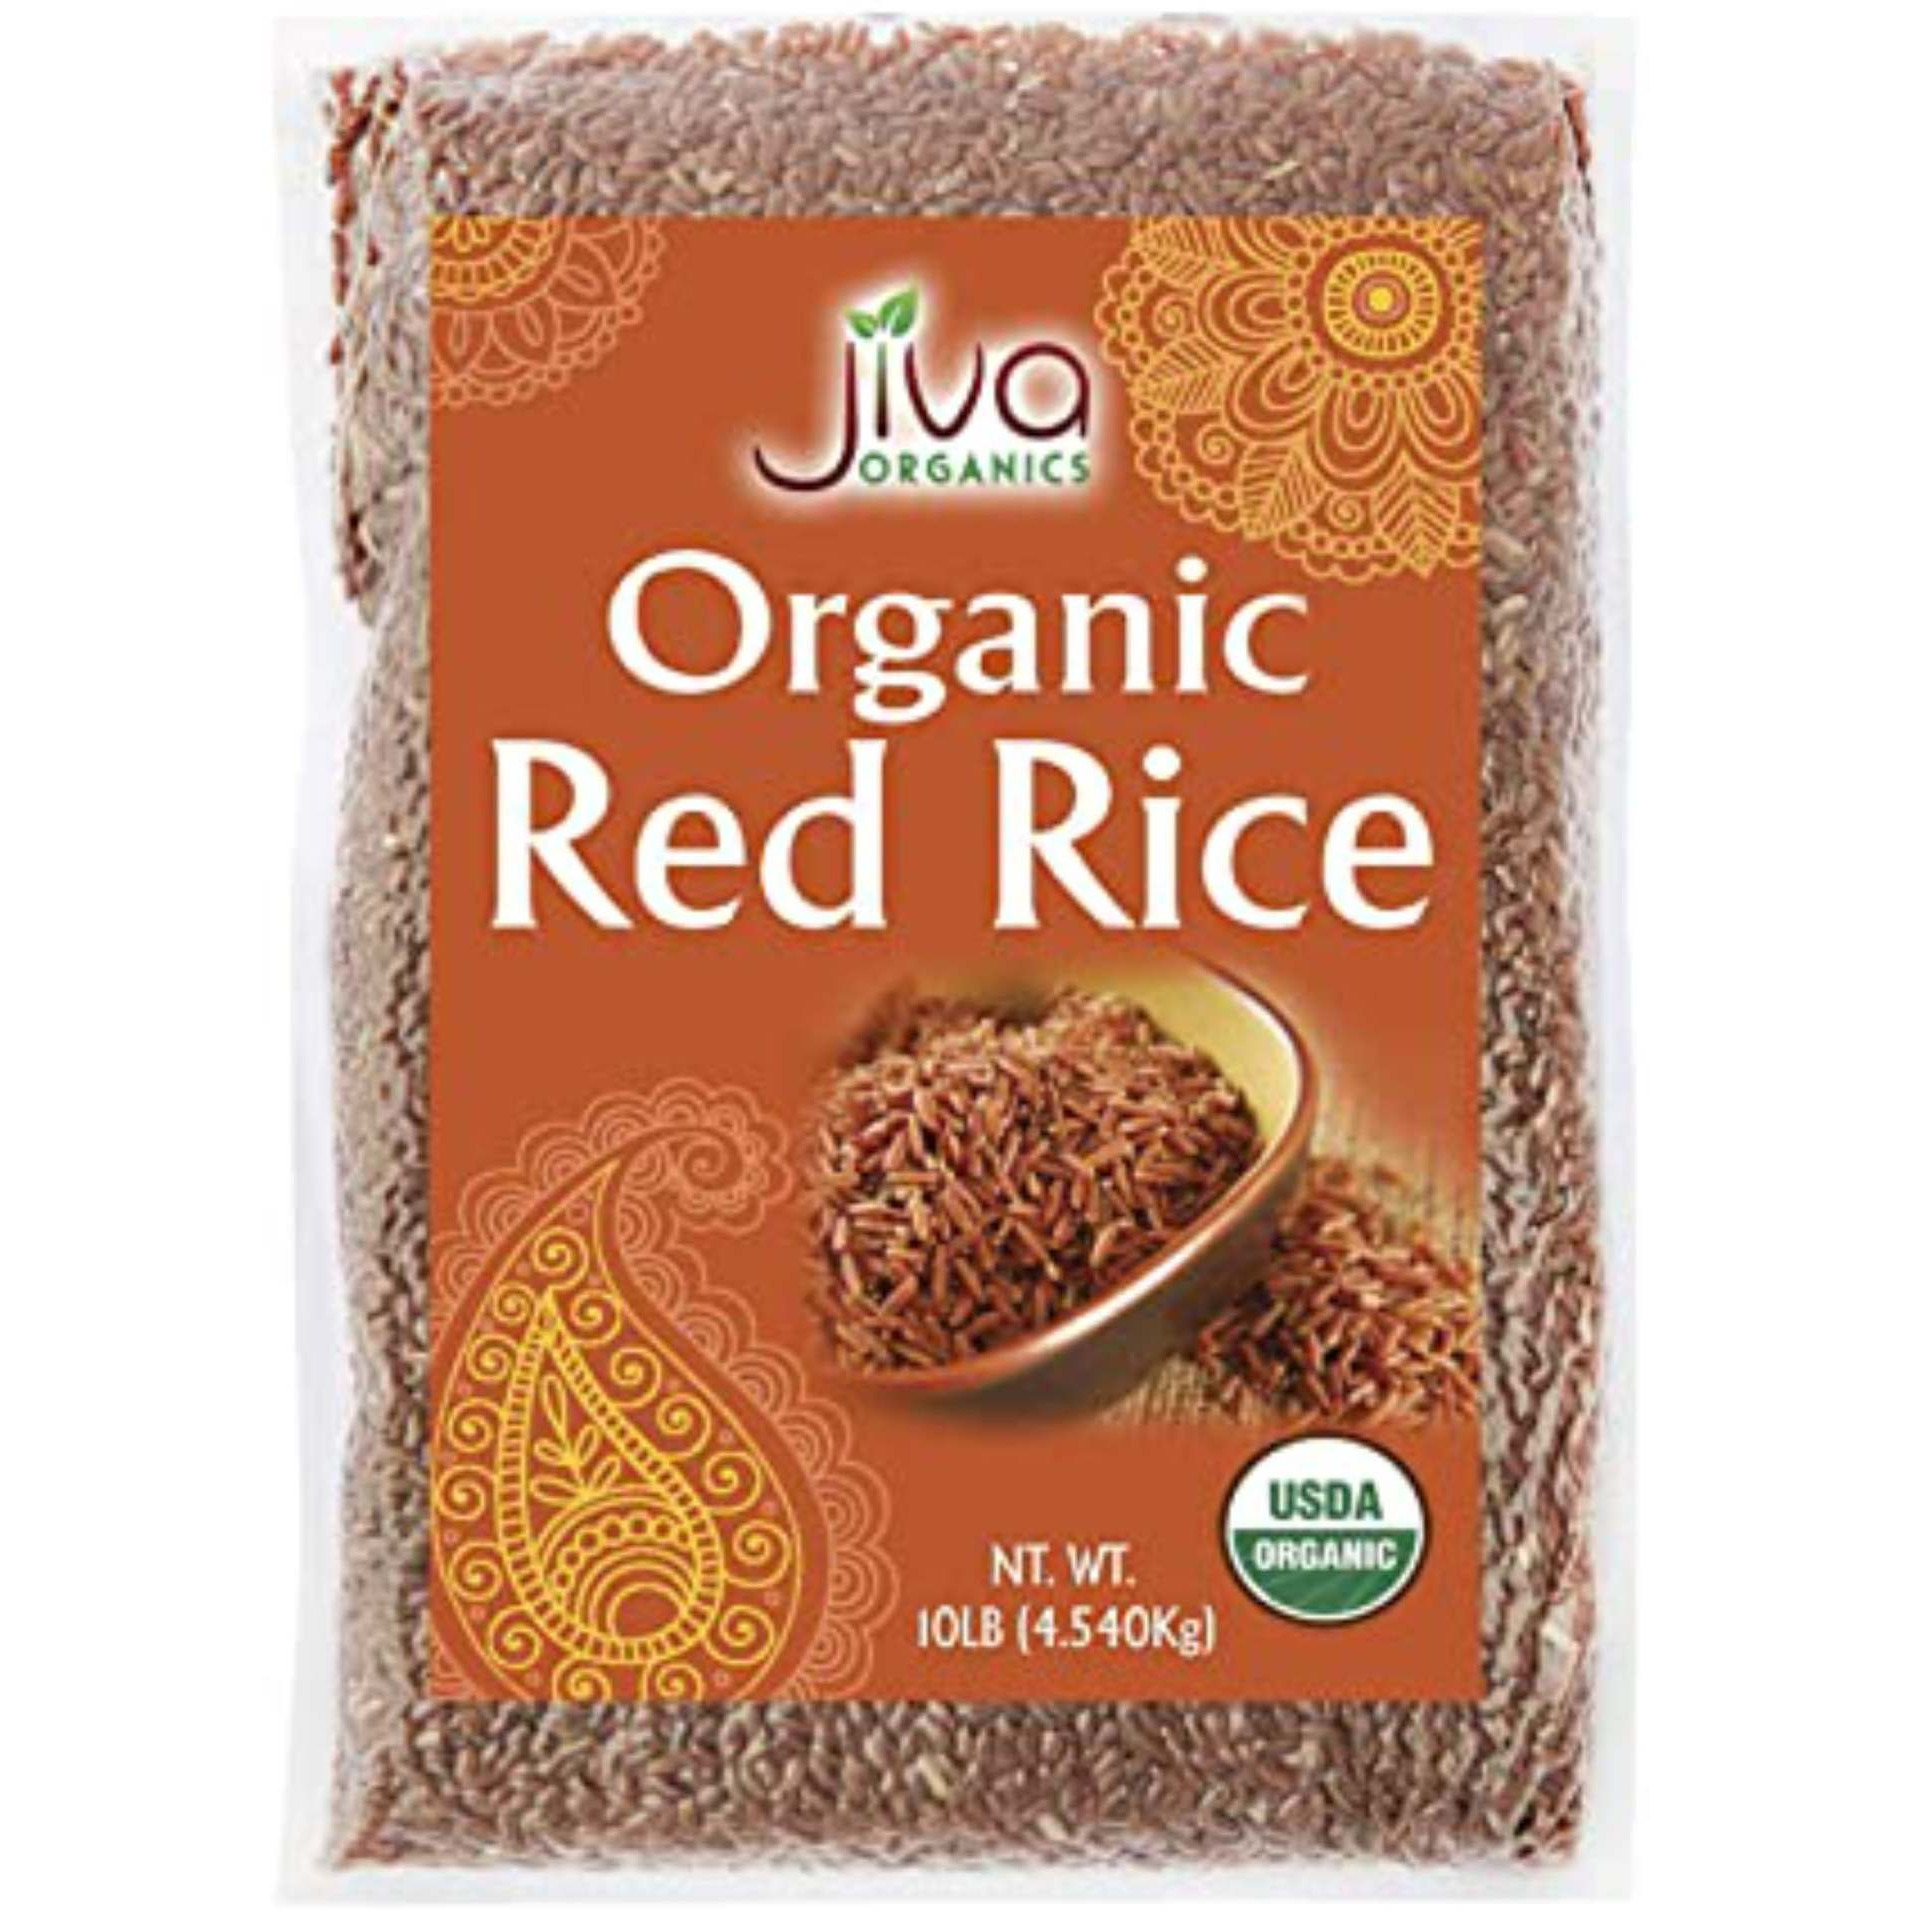 Jiva Organics Organic Red Rice - 2 Lb (908 Gm)